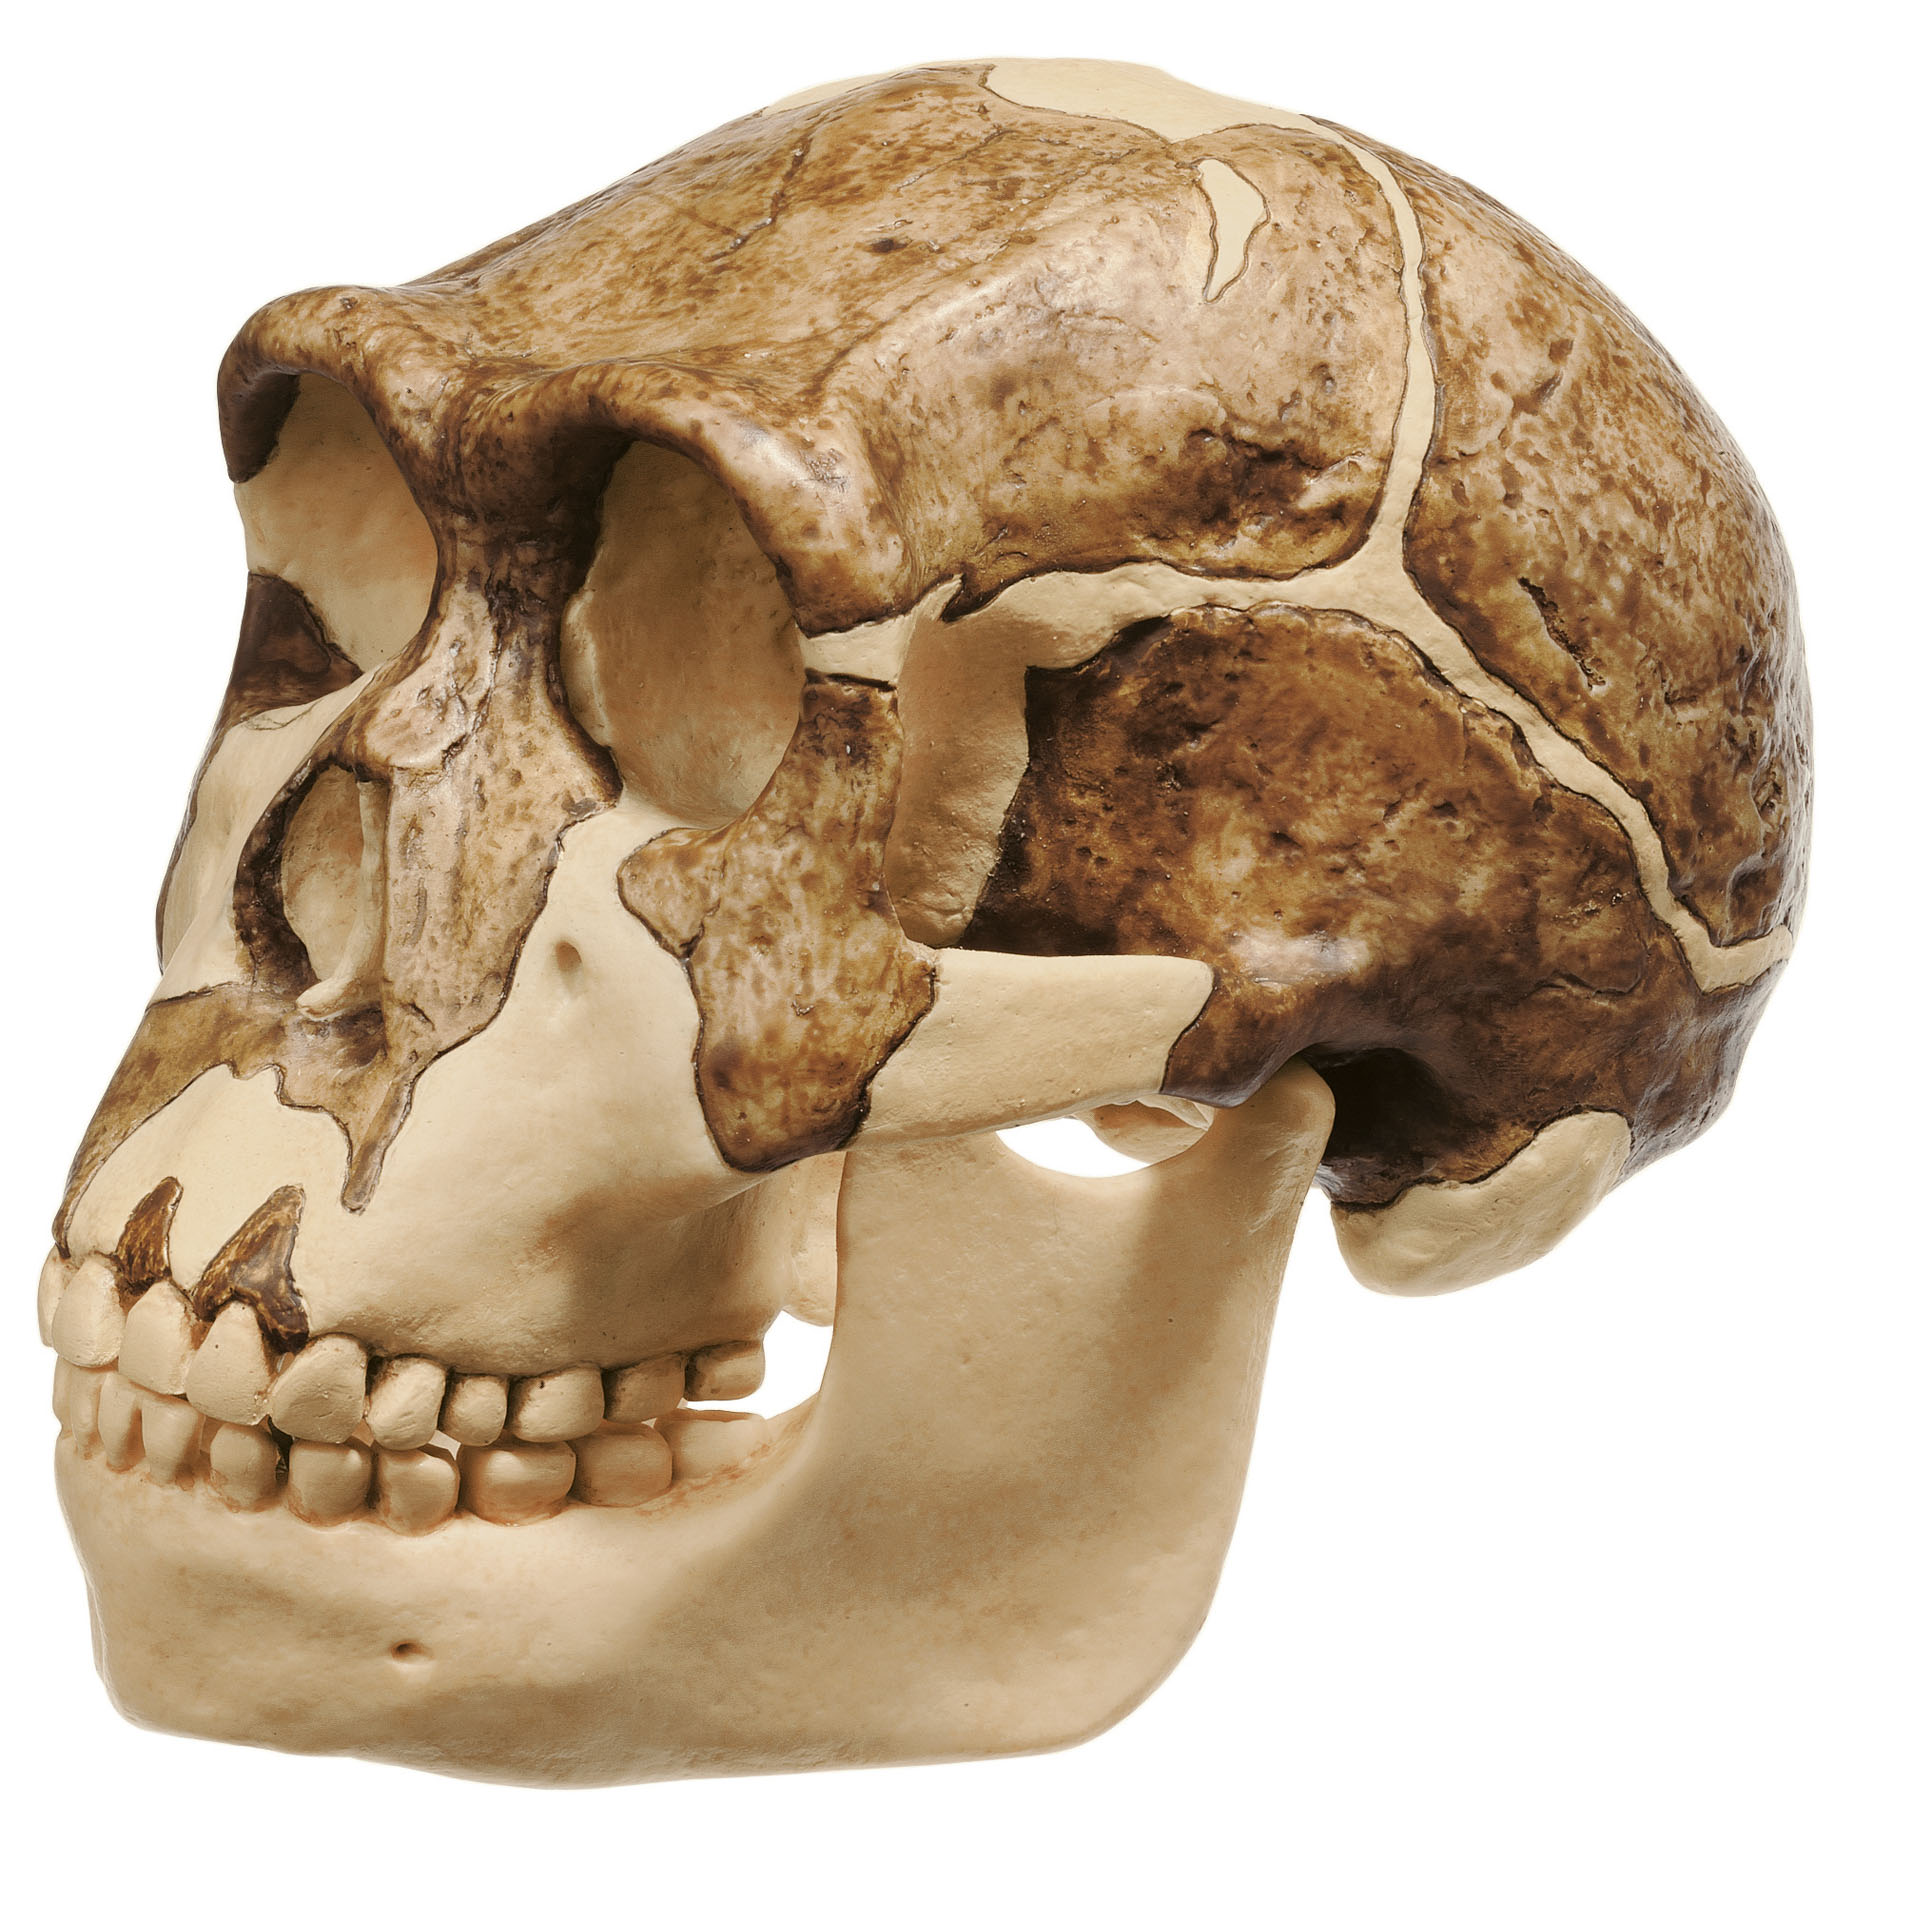 Reconstruction of a Skull of Homo Ergaster (Knm-er 3733)